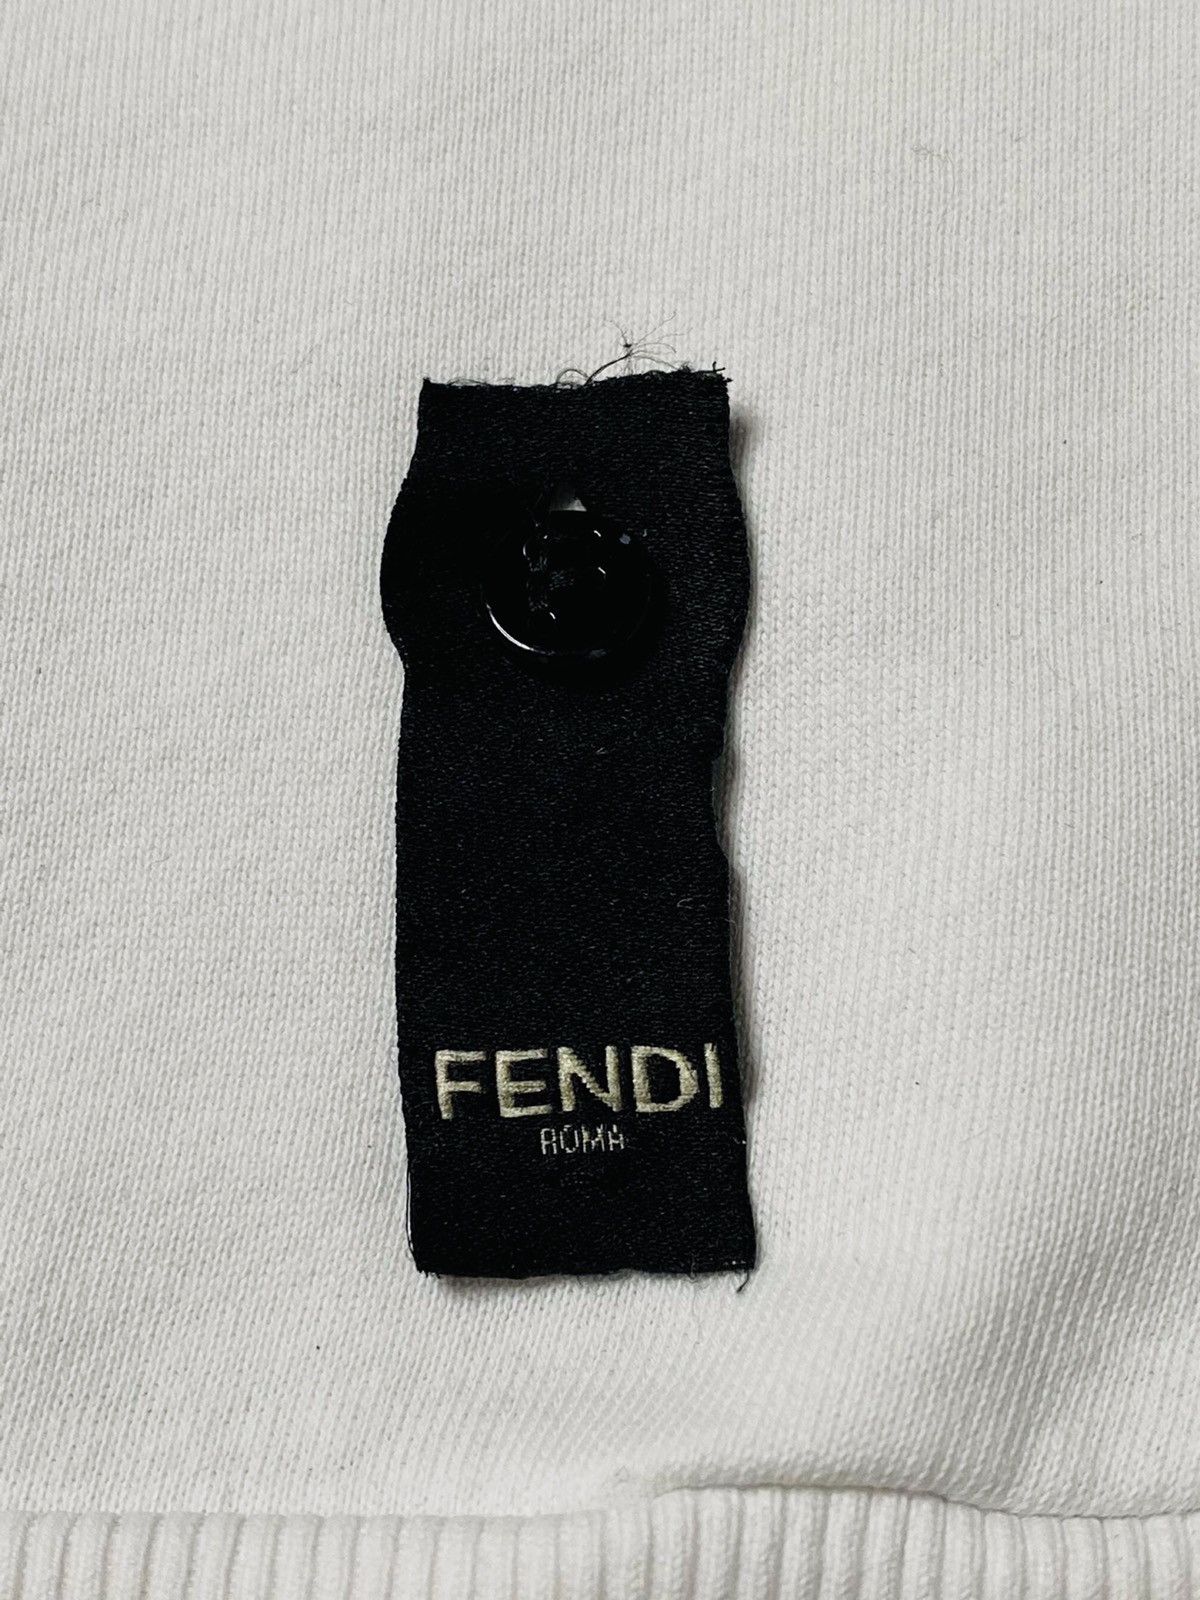 Fendi Fendi Monster Eyes Hoodie Size US S / EU 44-46 / 1 - 5 Thumbnail